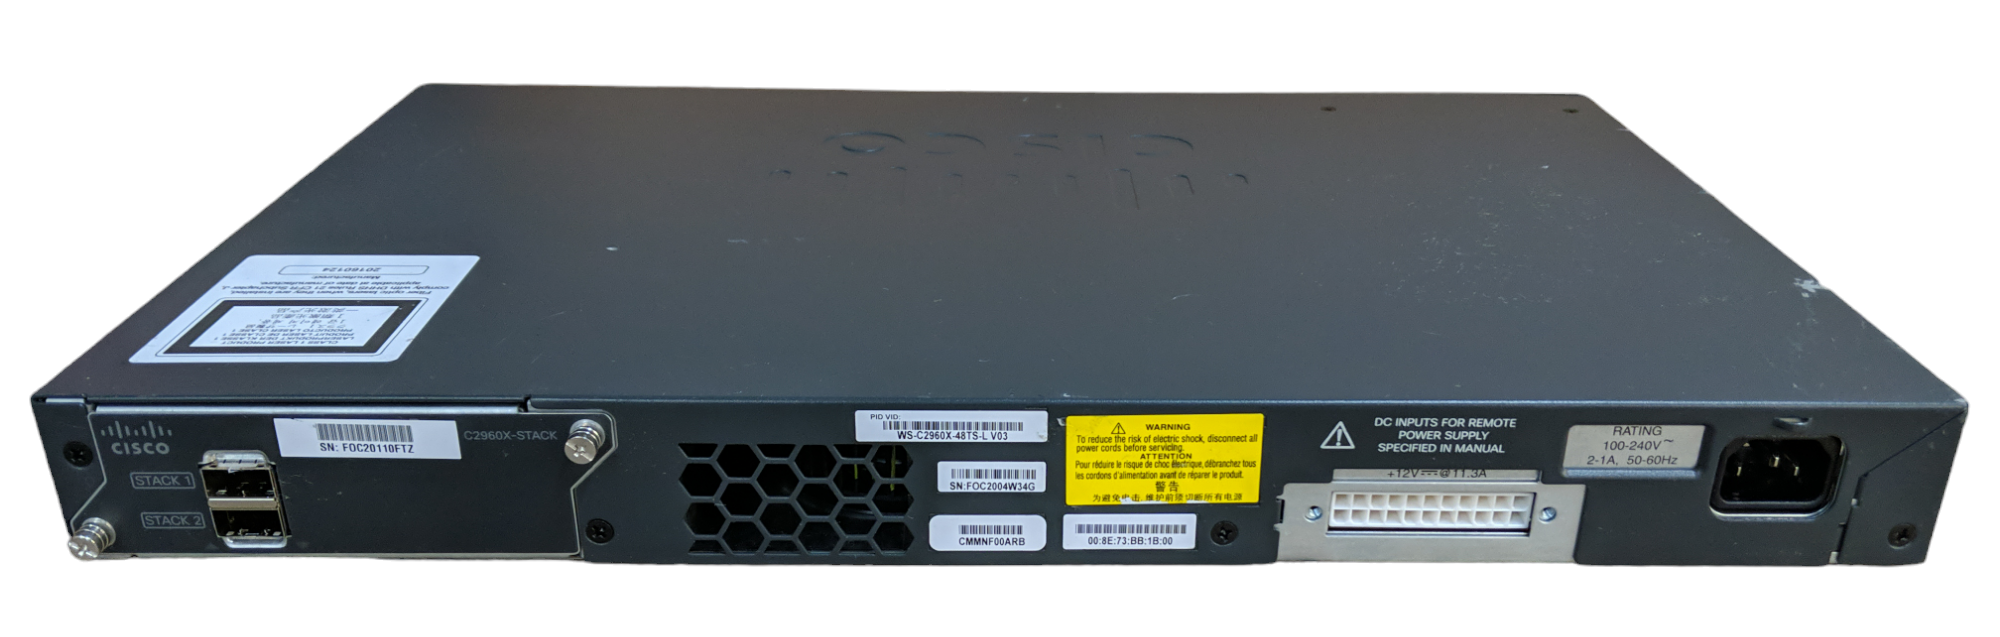 Cisco Catalyst 2960x - WS-C2960X-48TS-L - 48-Port 10/100/1000 Gigabit Switch